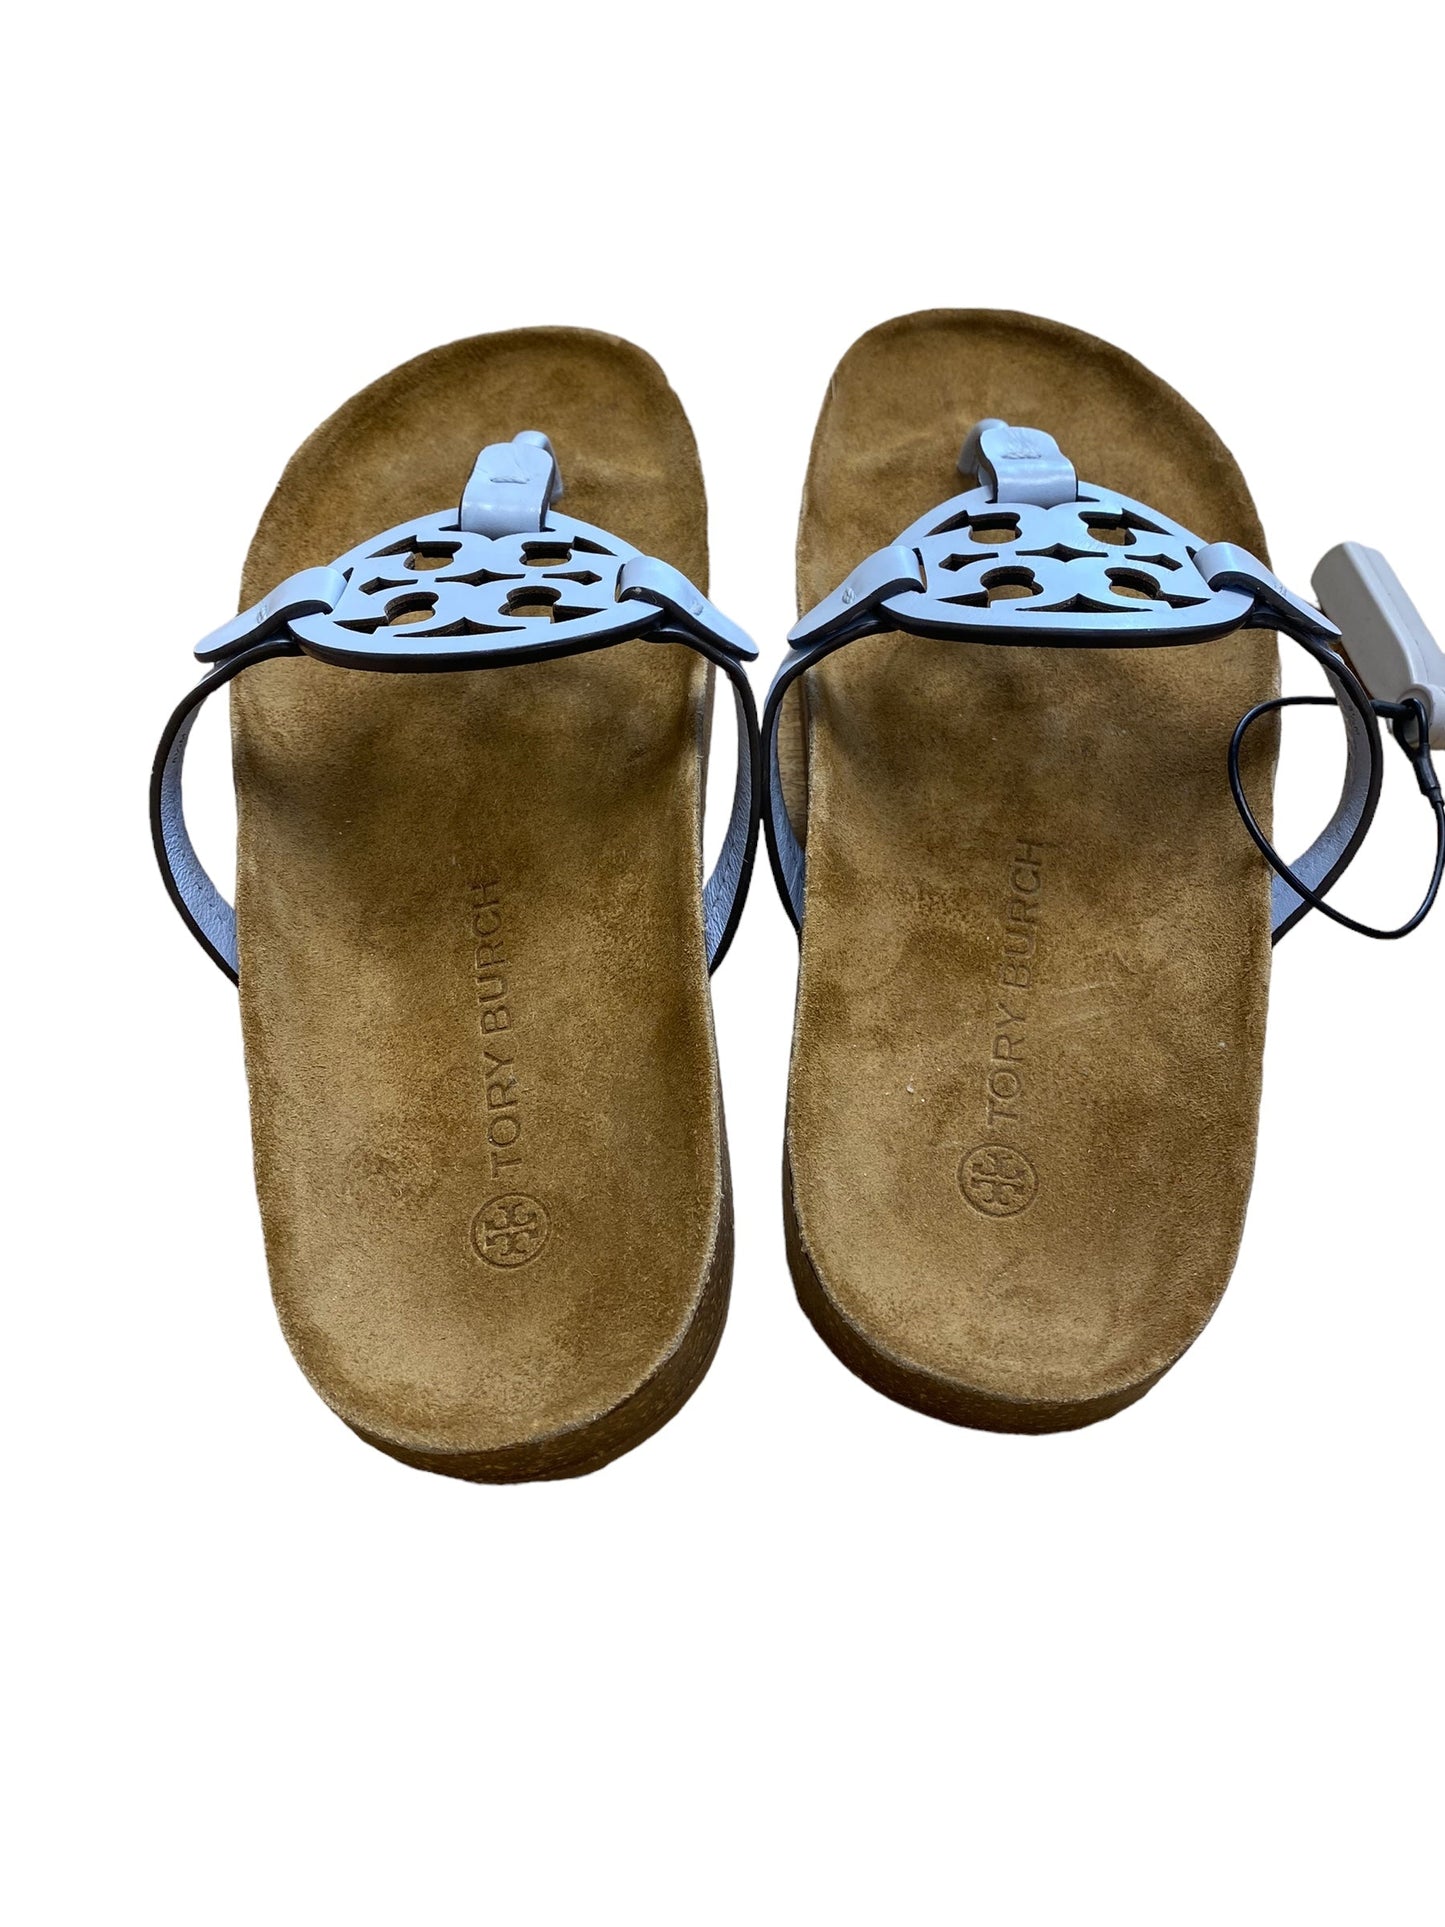 Blue & Brown Sandals Flip Flops Tory Burch, Size 8.5